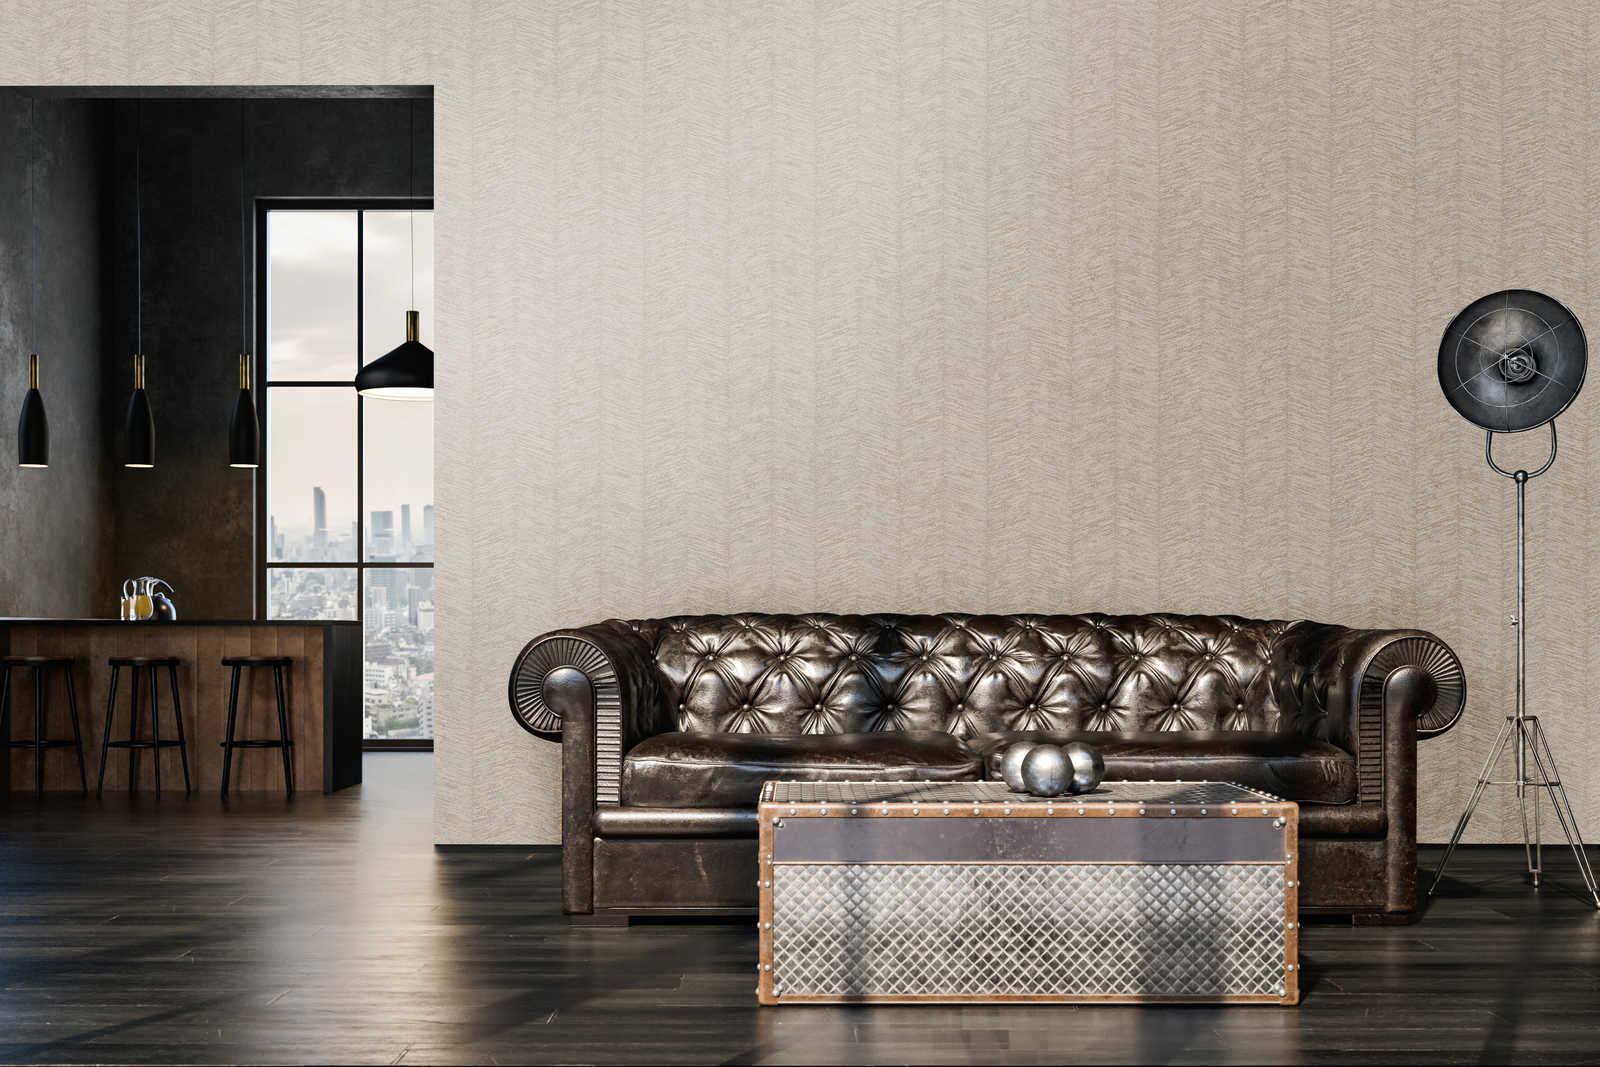             Textured wallpaper ethnic design with stripe effect - cream, metallic, beige
        